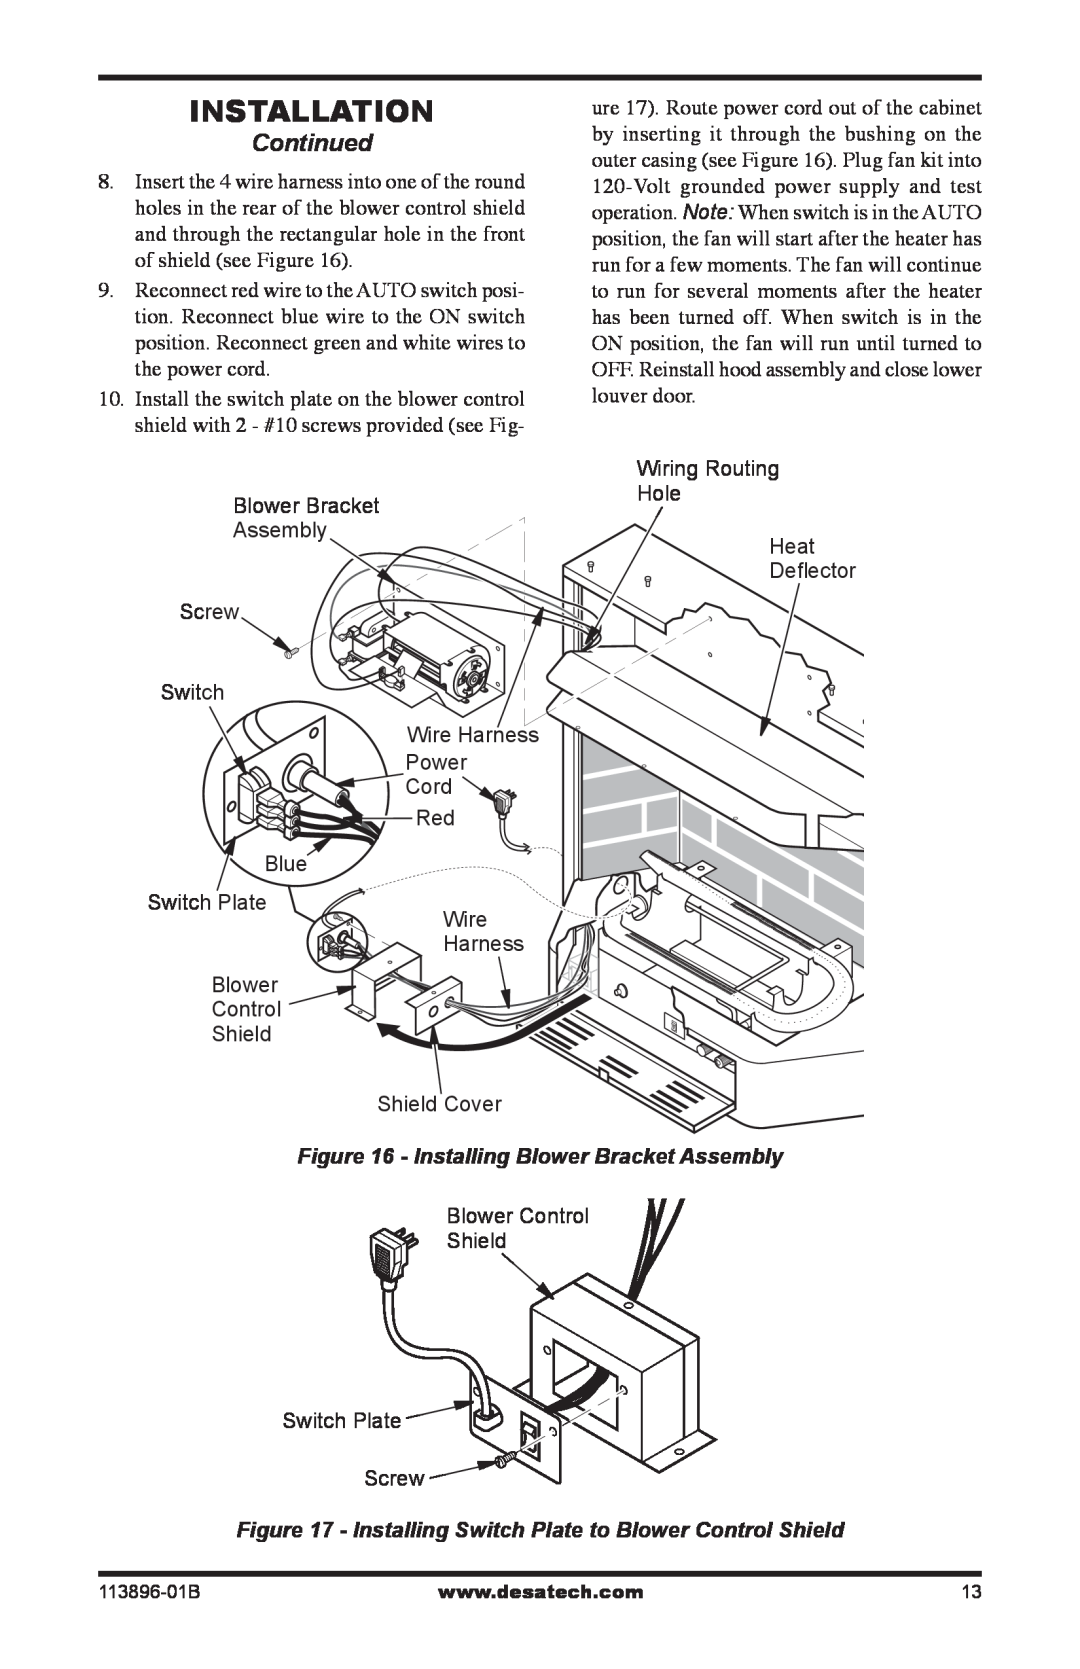 Desa CF26NTA installation manual Continued, Installing Blower Bracket Assembly 